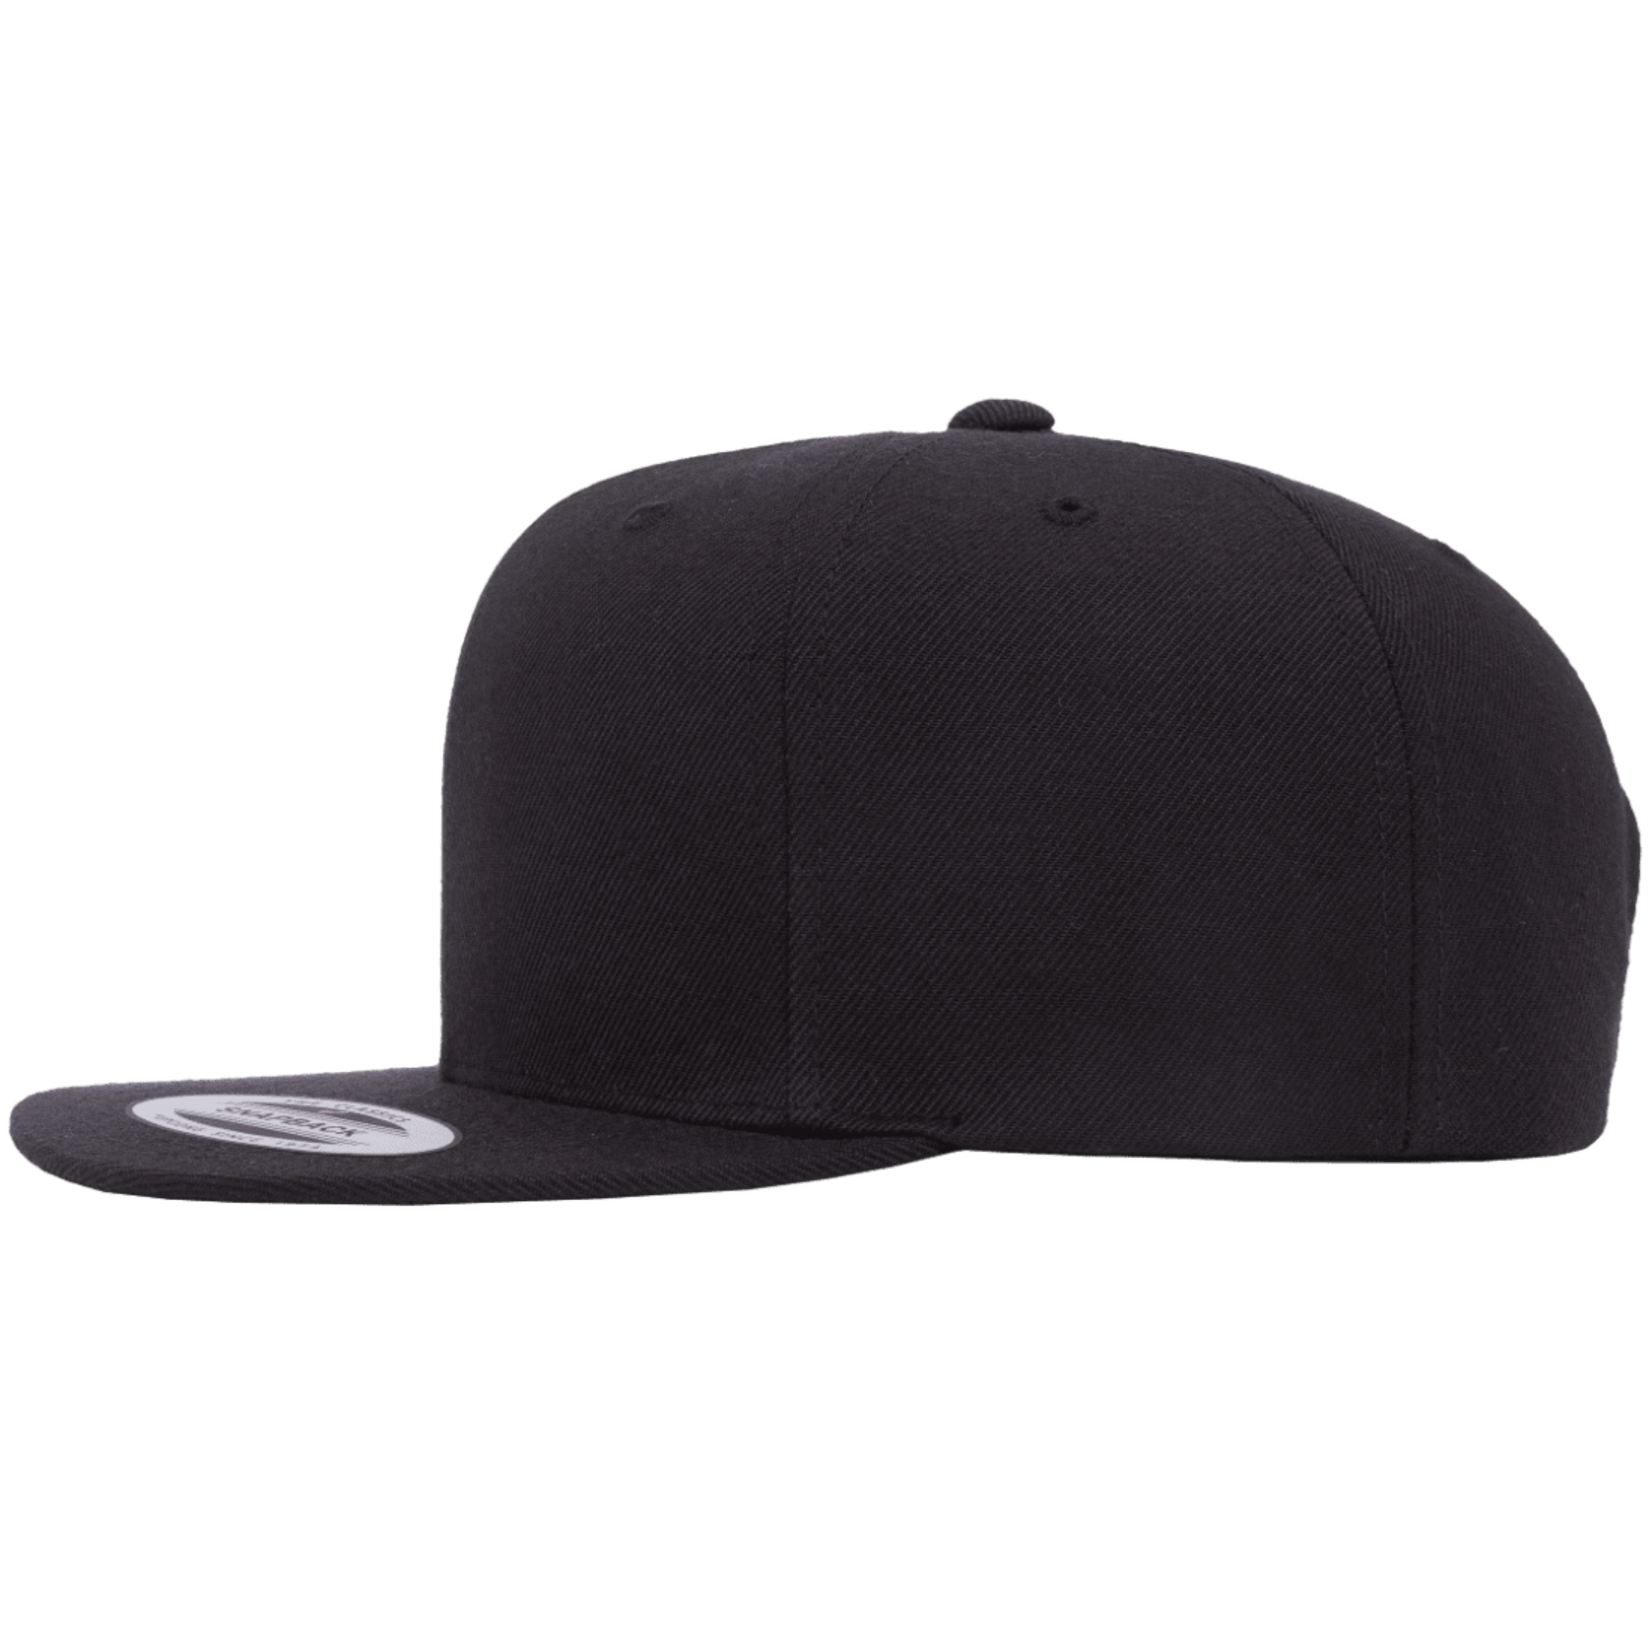 Buy Rusty Men's Chronic 3 Flexfit Cap Snapback Hat, Black Marle, ONE at